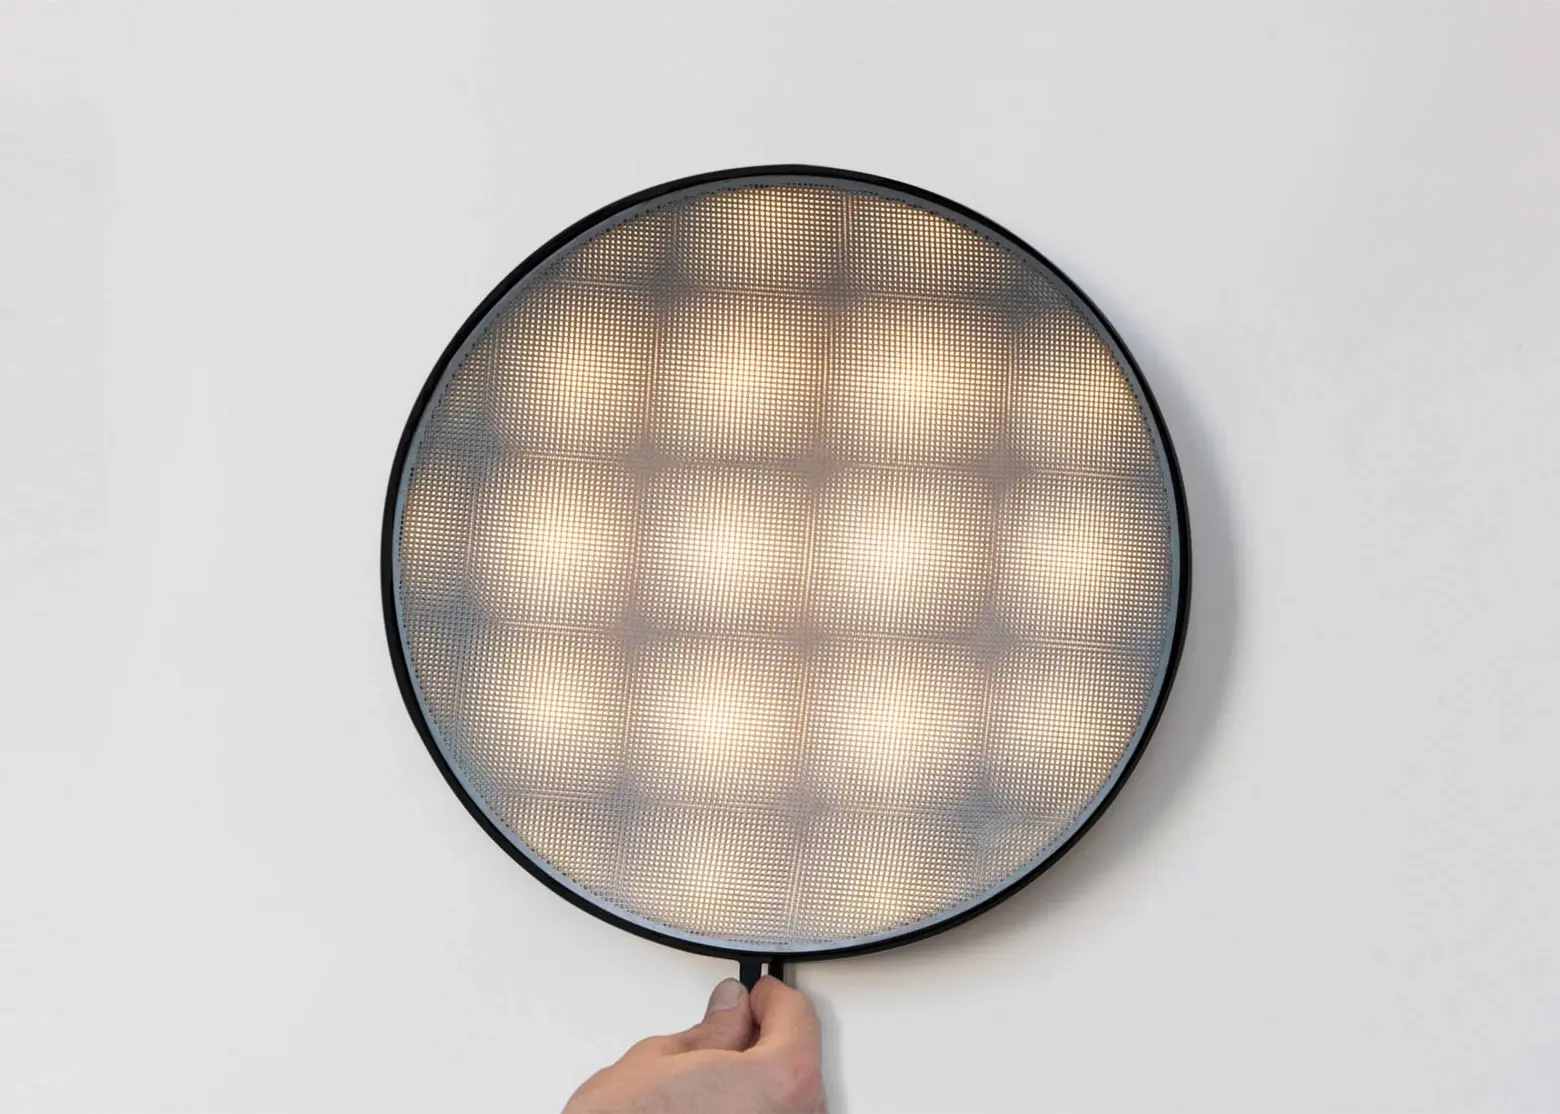 David Derksen, Moiré Lights, Moiré effect, perforated disks, LED light, playful lamps, light patterns